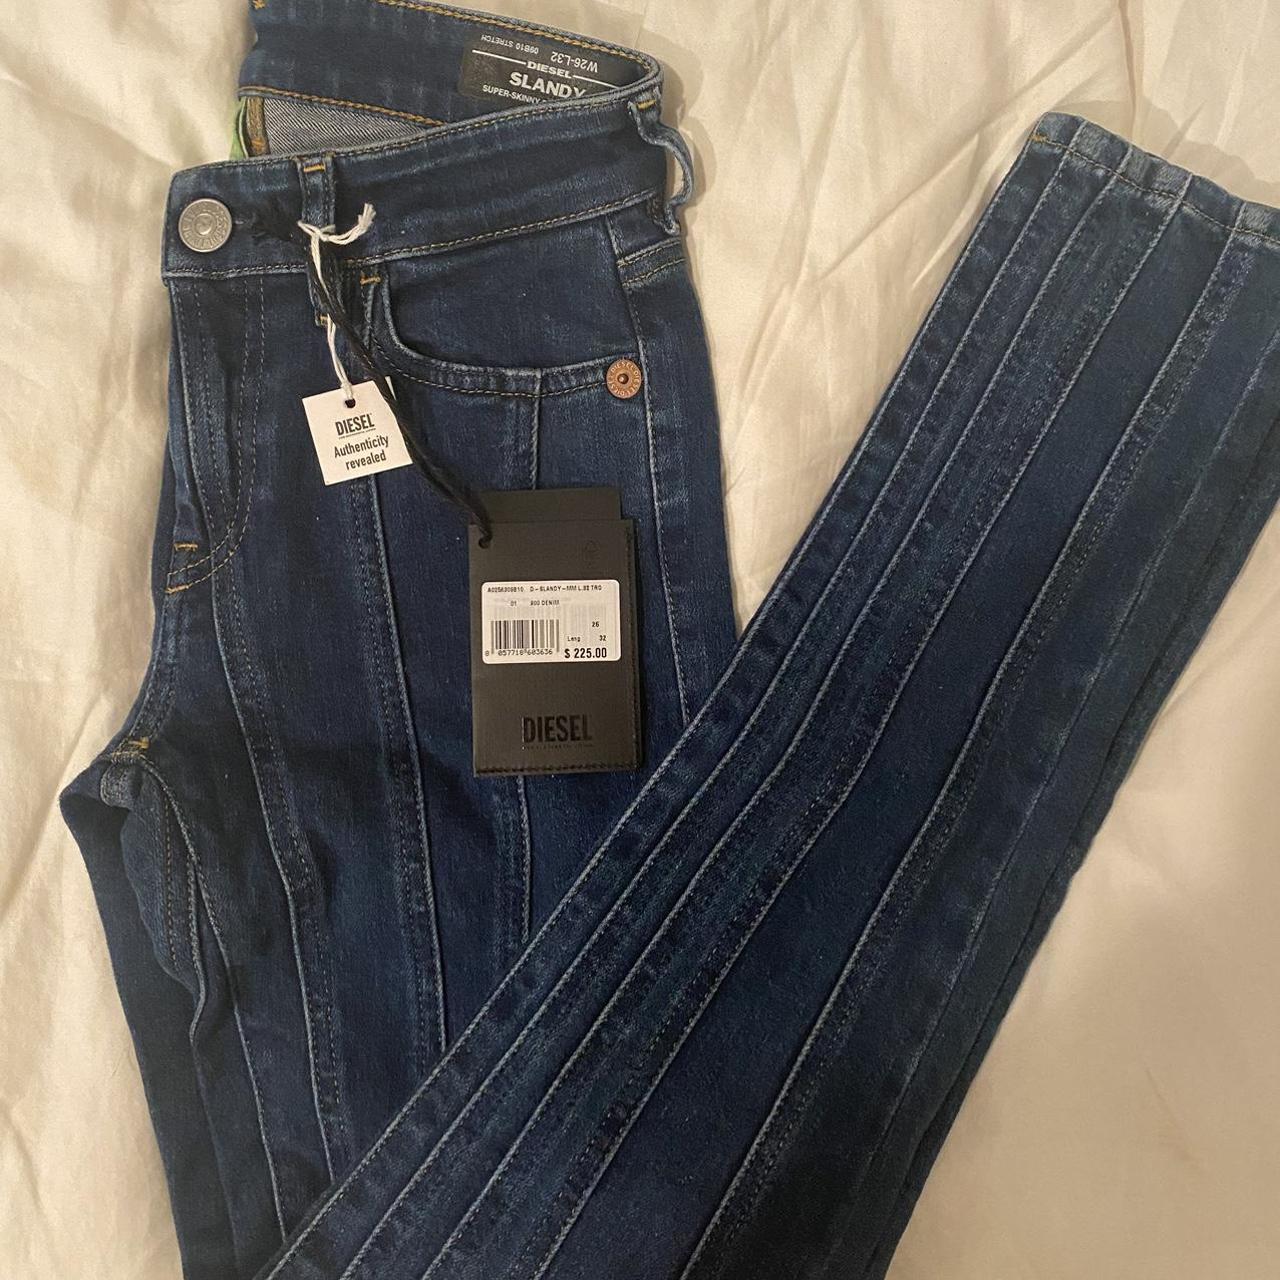 100% authentic diesel skinny jeans. never worn. open... - Depop